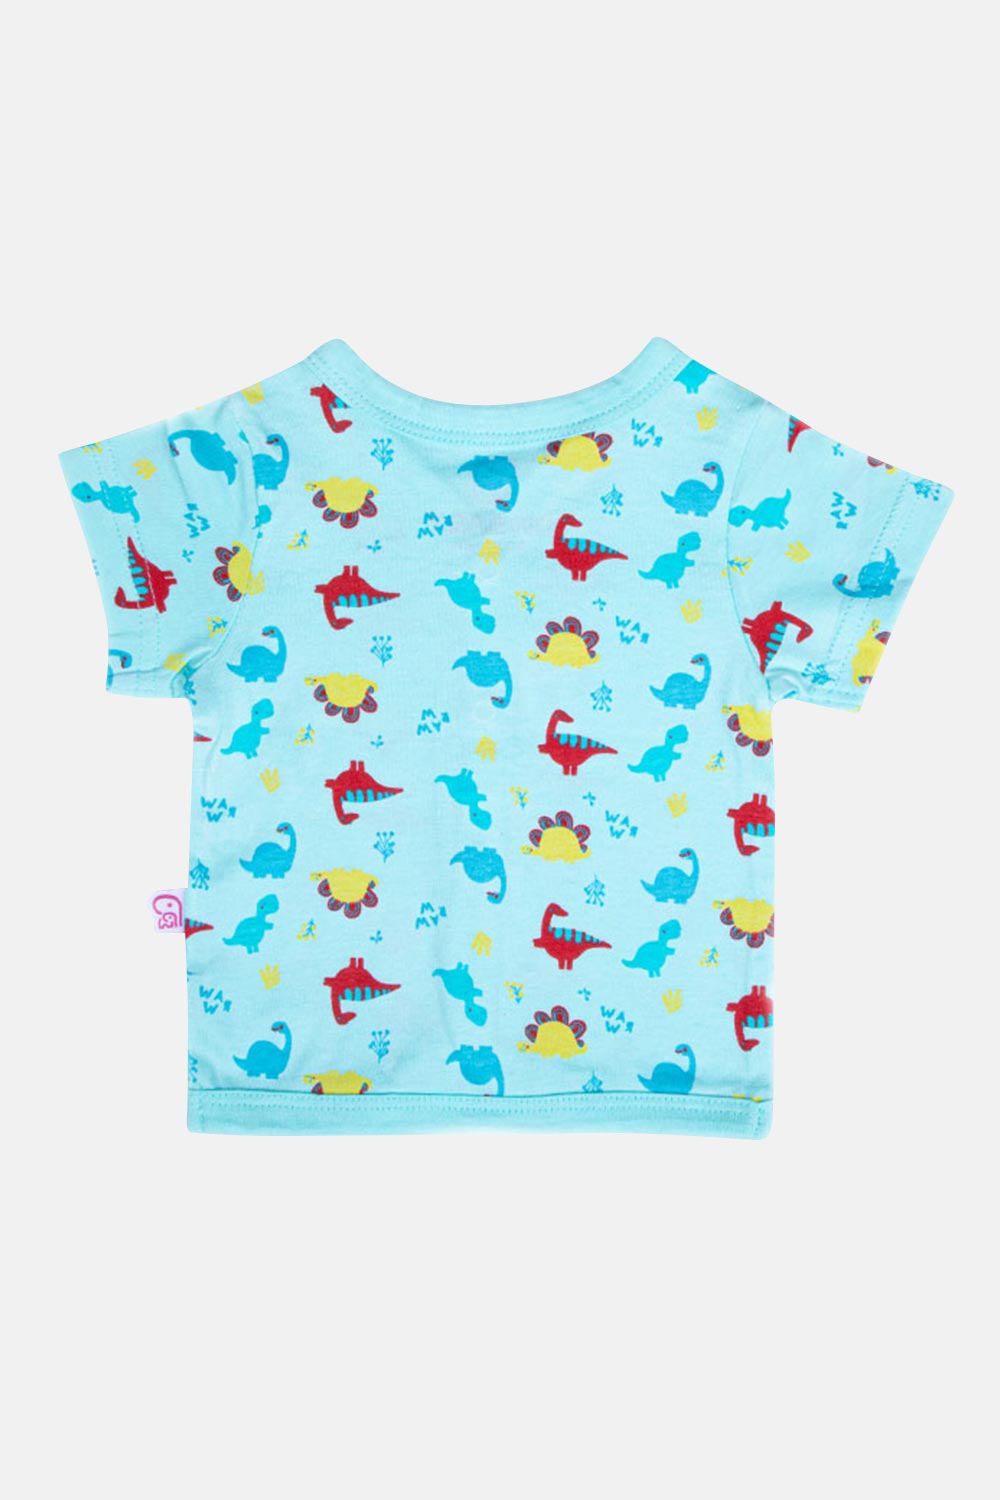 Oh Baby Dino Print V- Neck Half Sleeve - HS01 Size   0m-3m Color Aqua